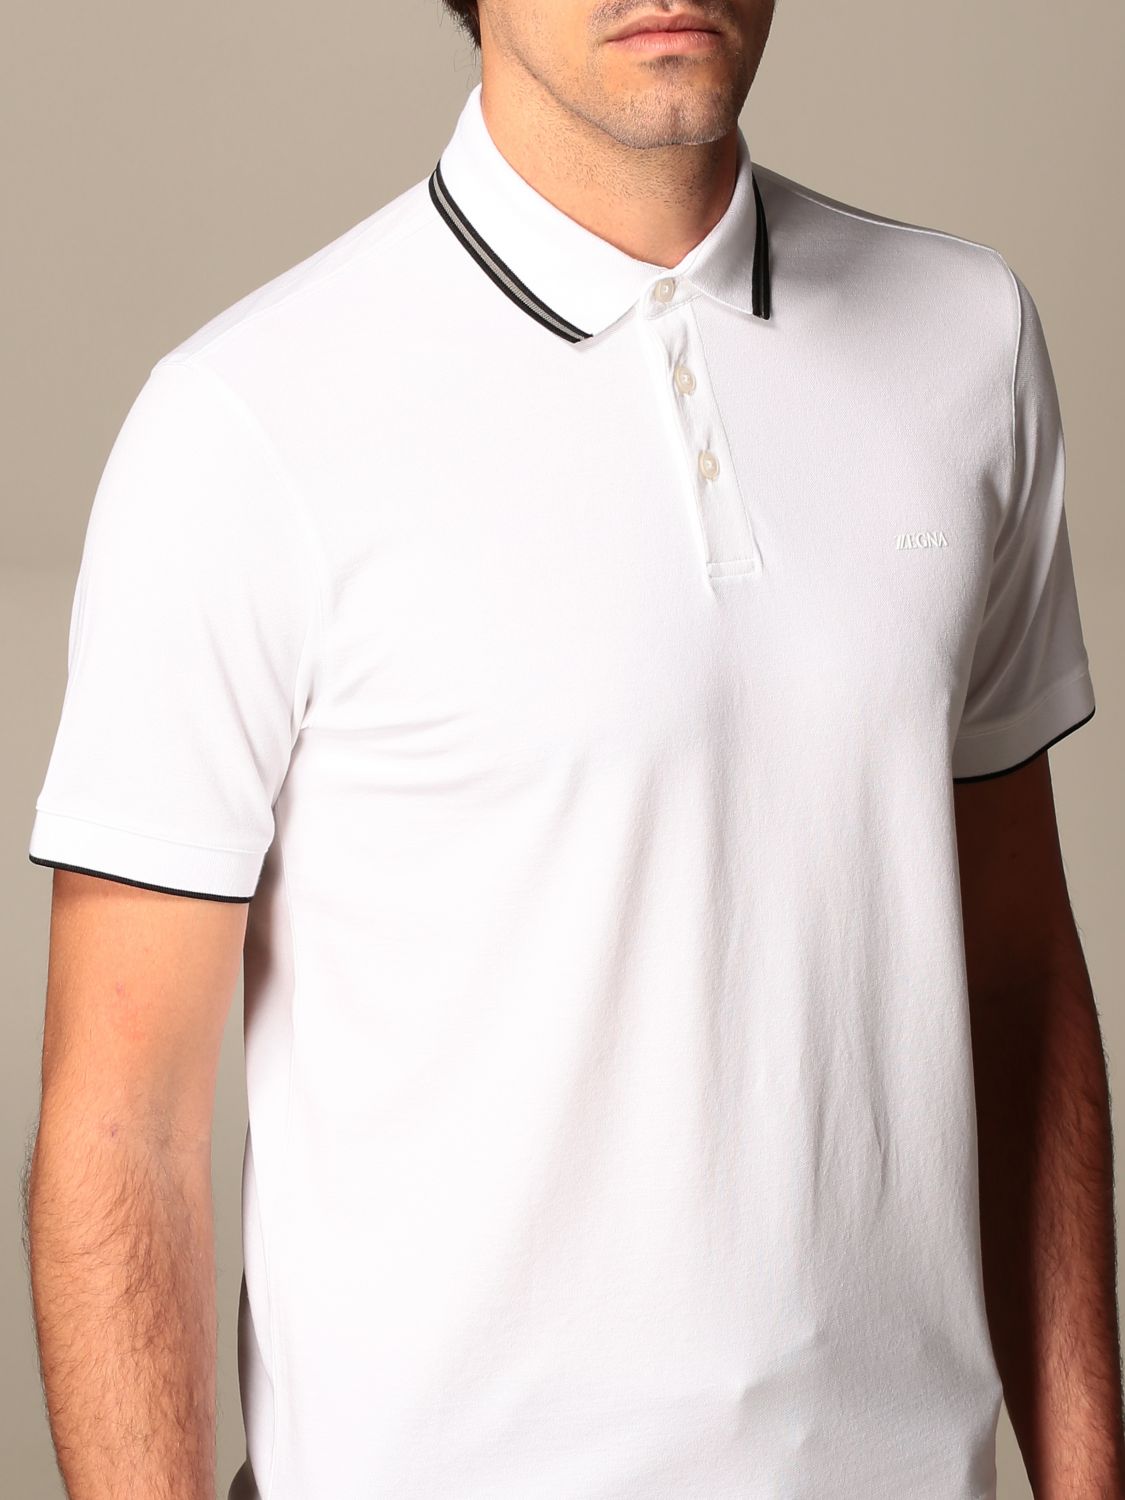 Z ZEGNA: stretch cotton polo shirt with logo - White | Polo Shirt 